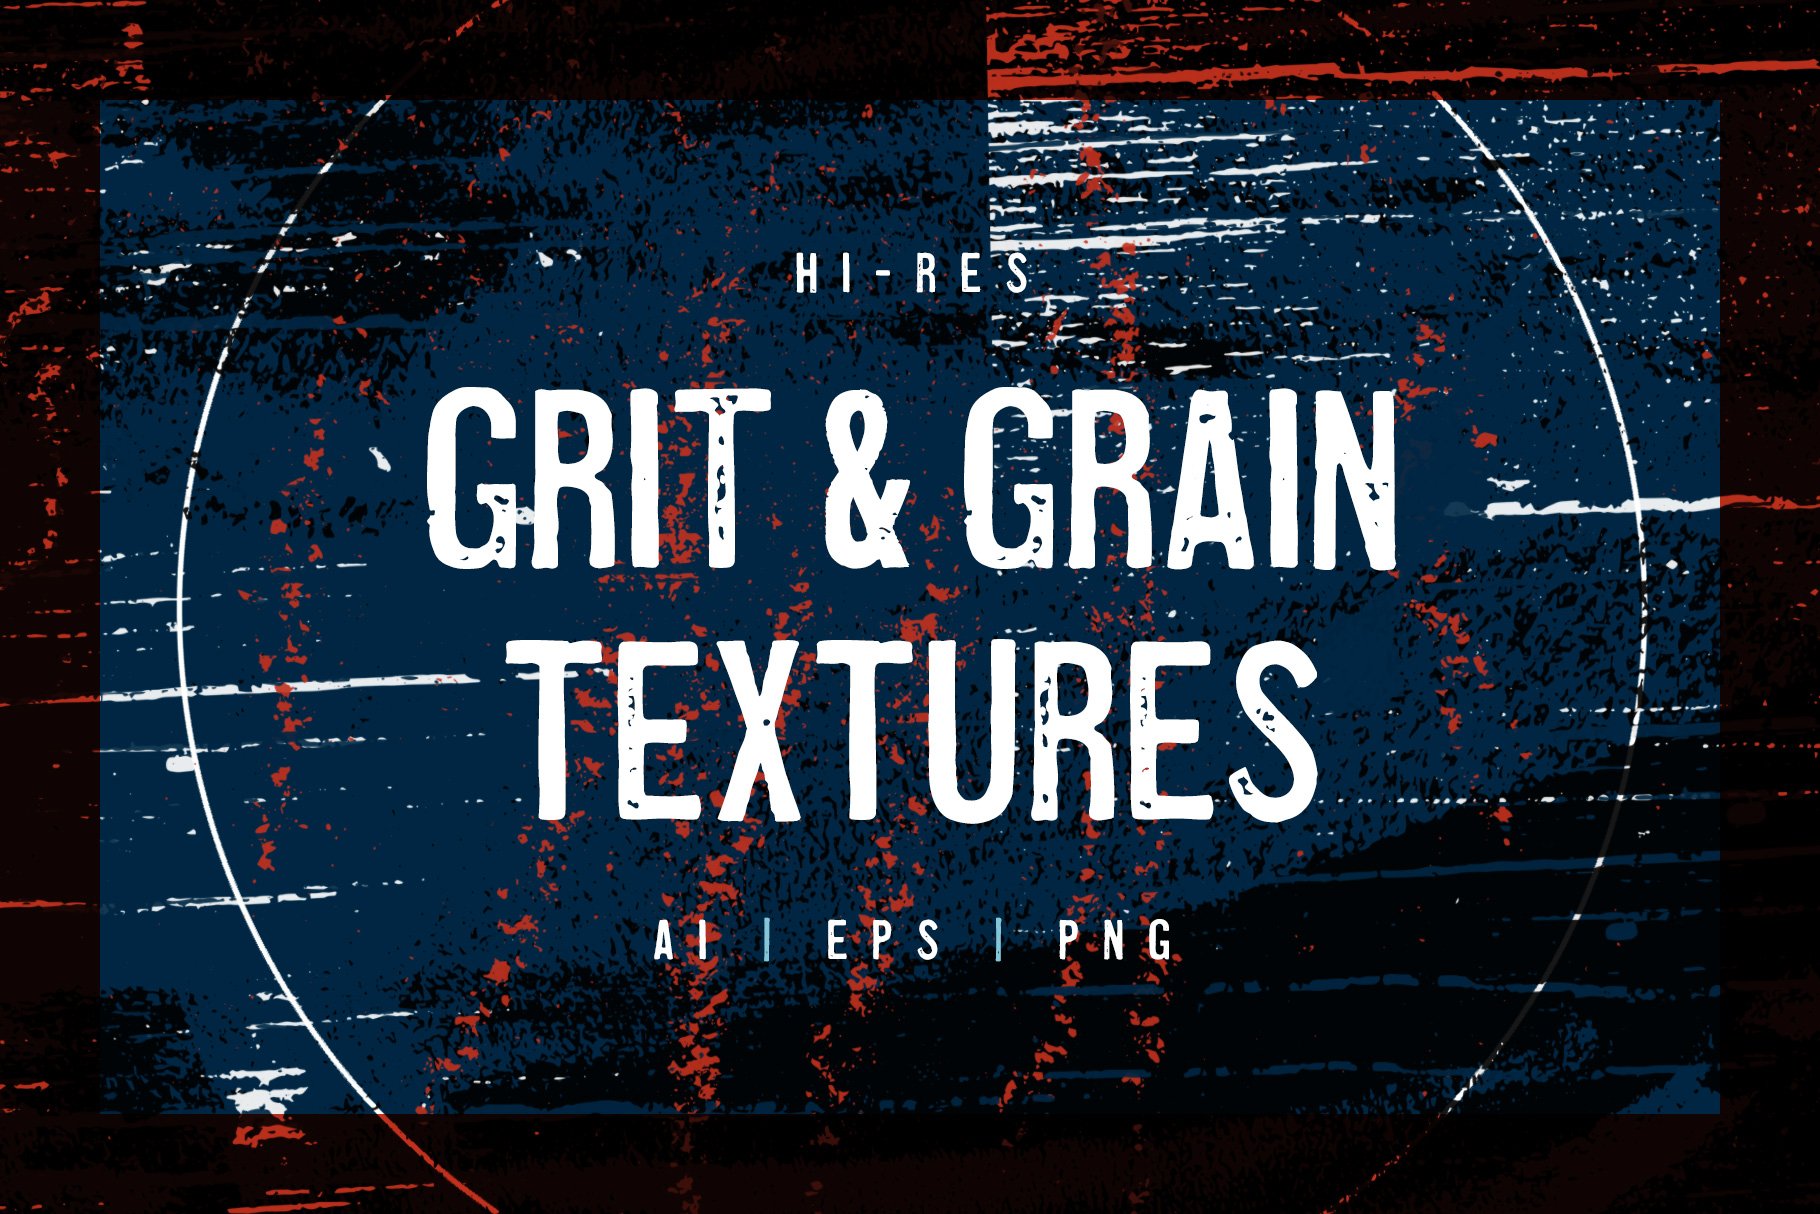 Grit & Grain Textures cover image.